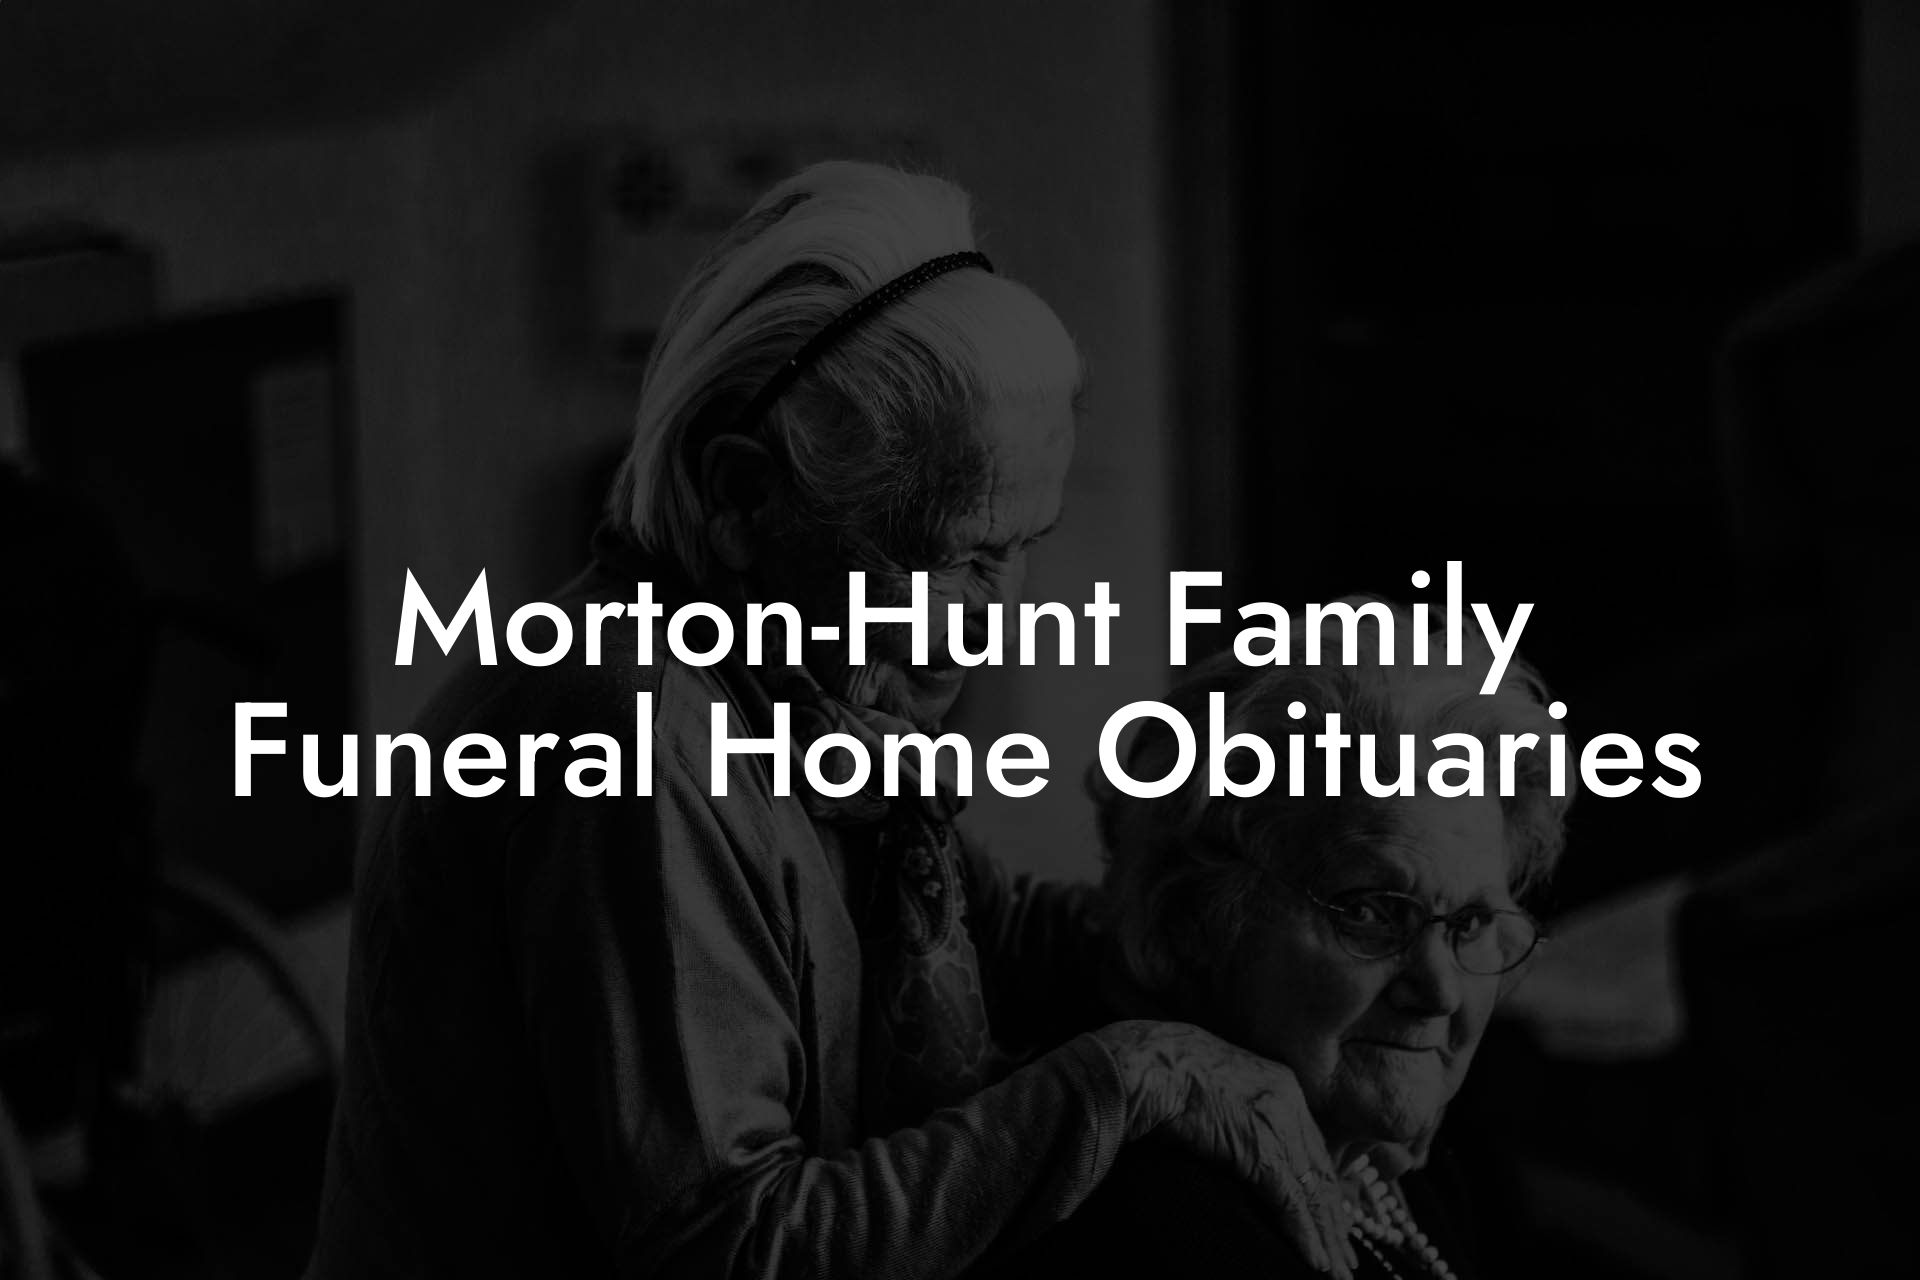 Morton-Hunt Family Funeral Home Obituaries